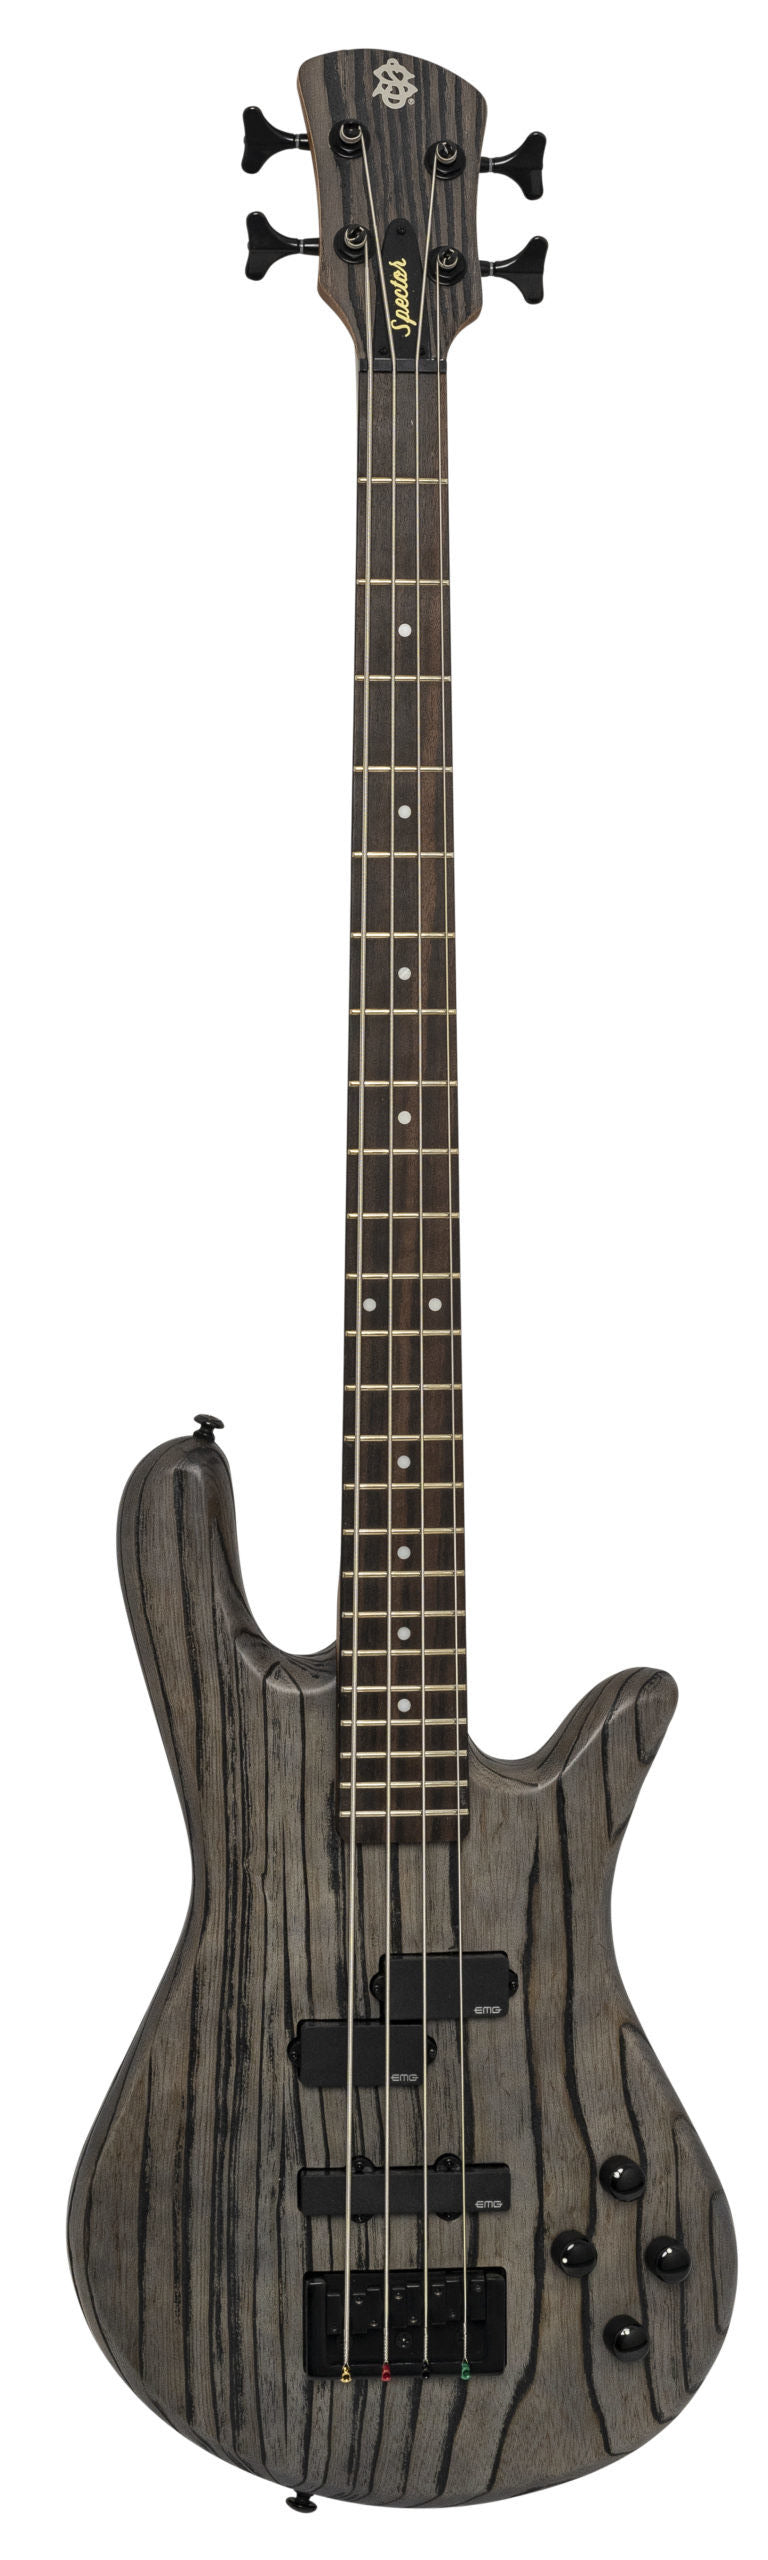 Spector NS Pulse 4 4 String Bass Guitar - Charcoal